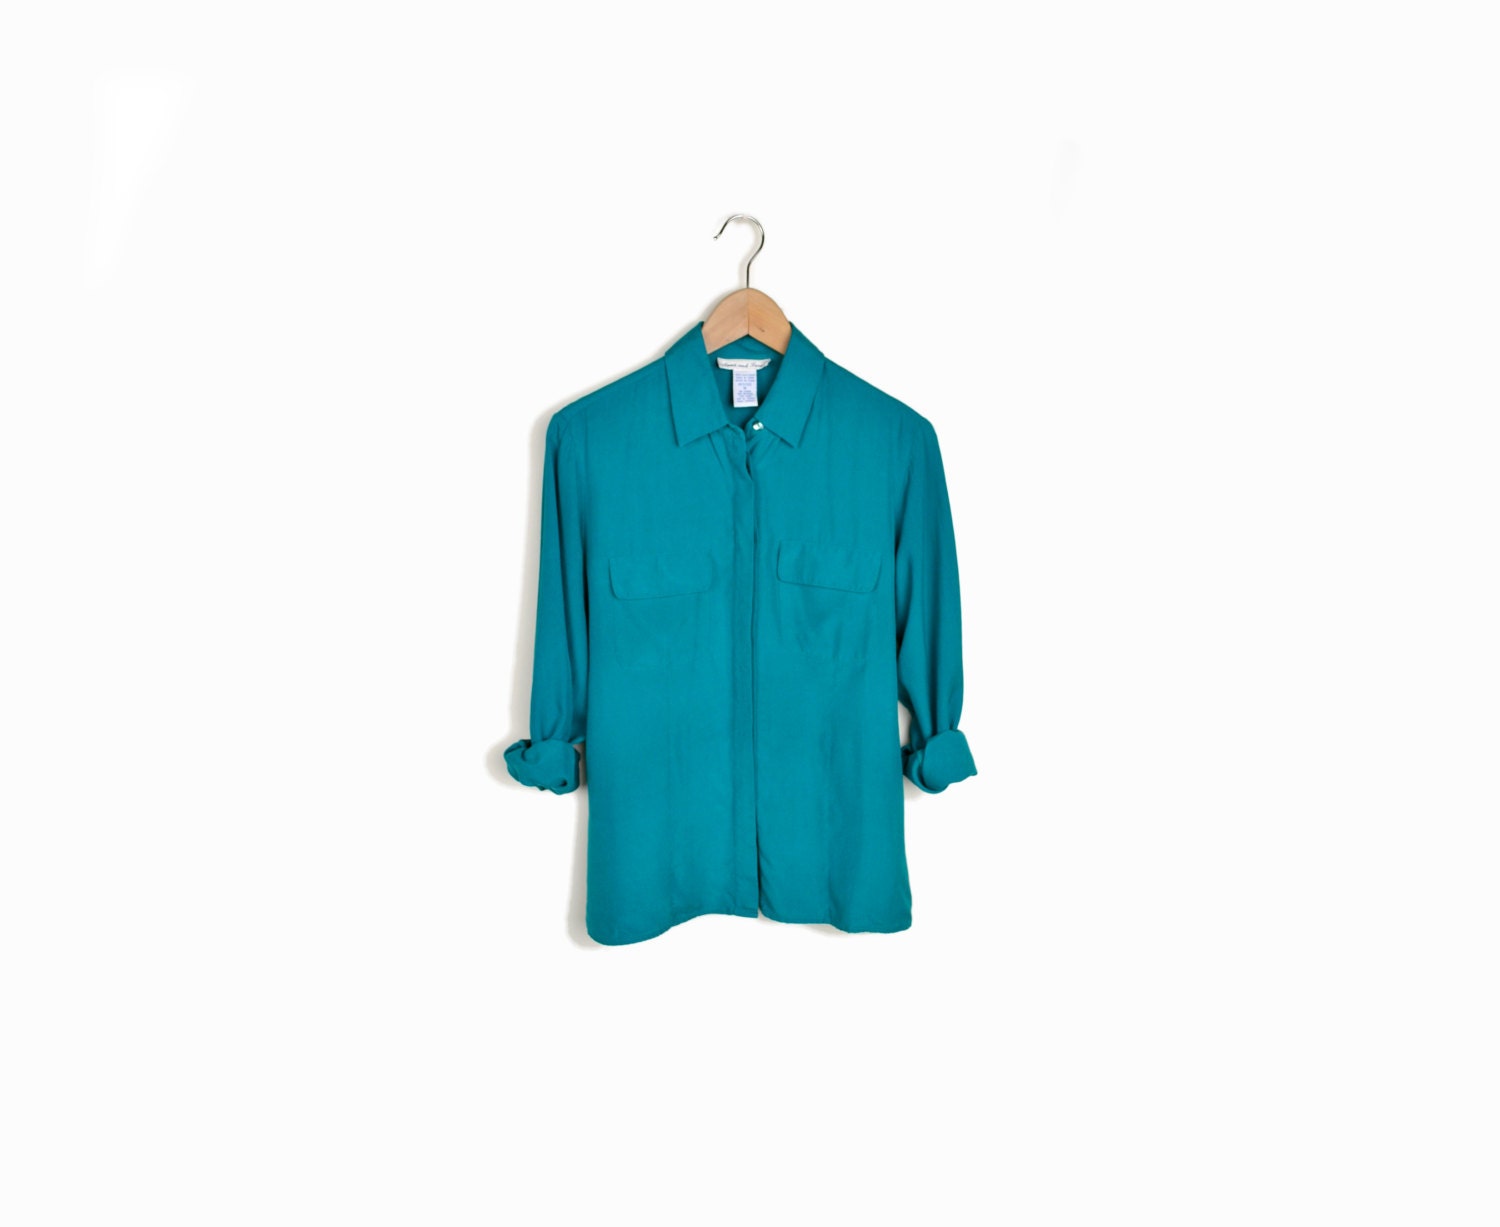 Vintage Silk Boy Shirt in Caribbean Blue – s/m – Etsy finds